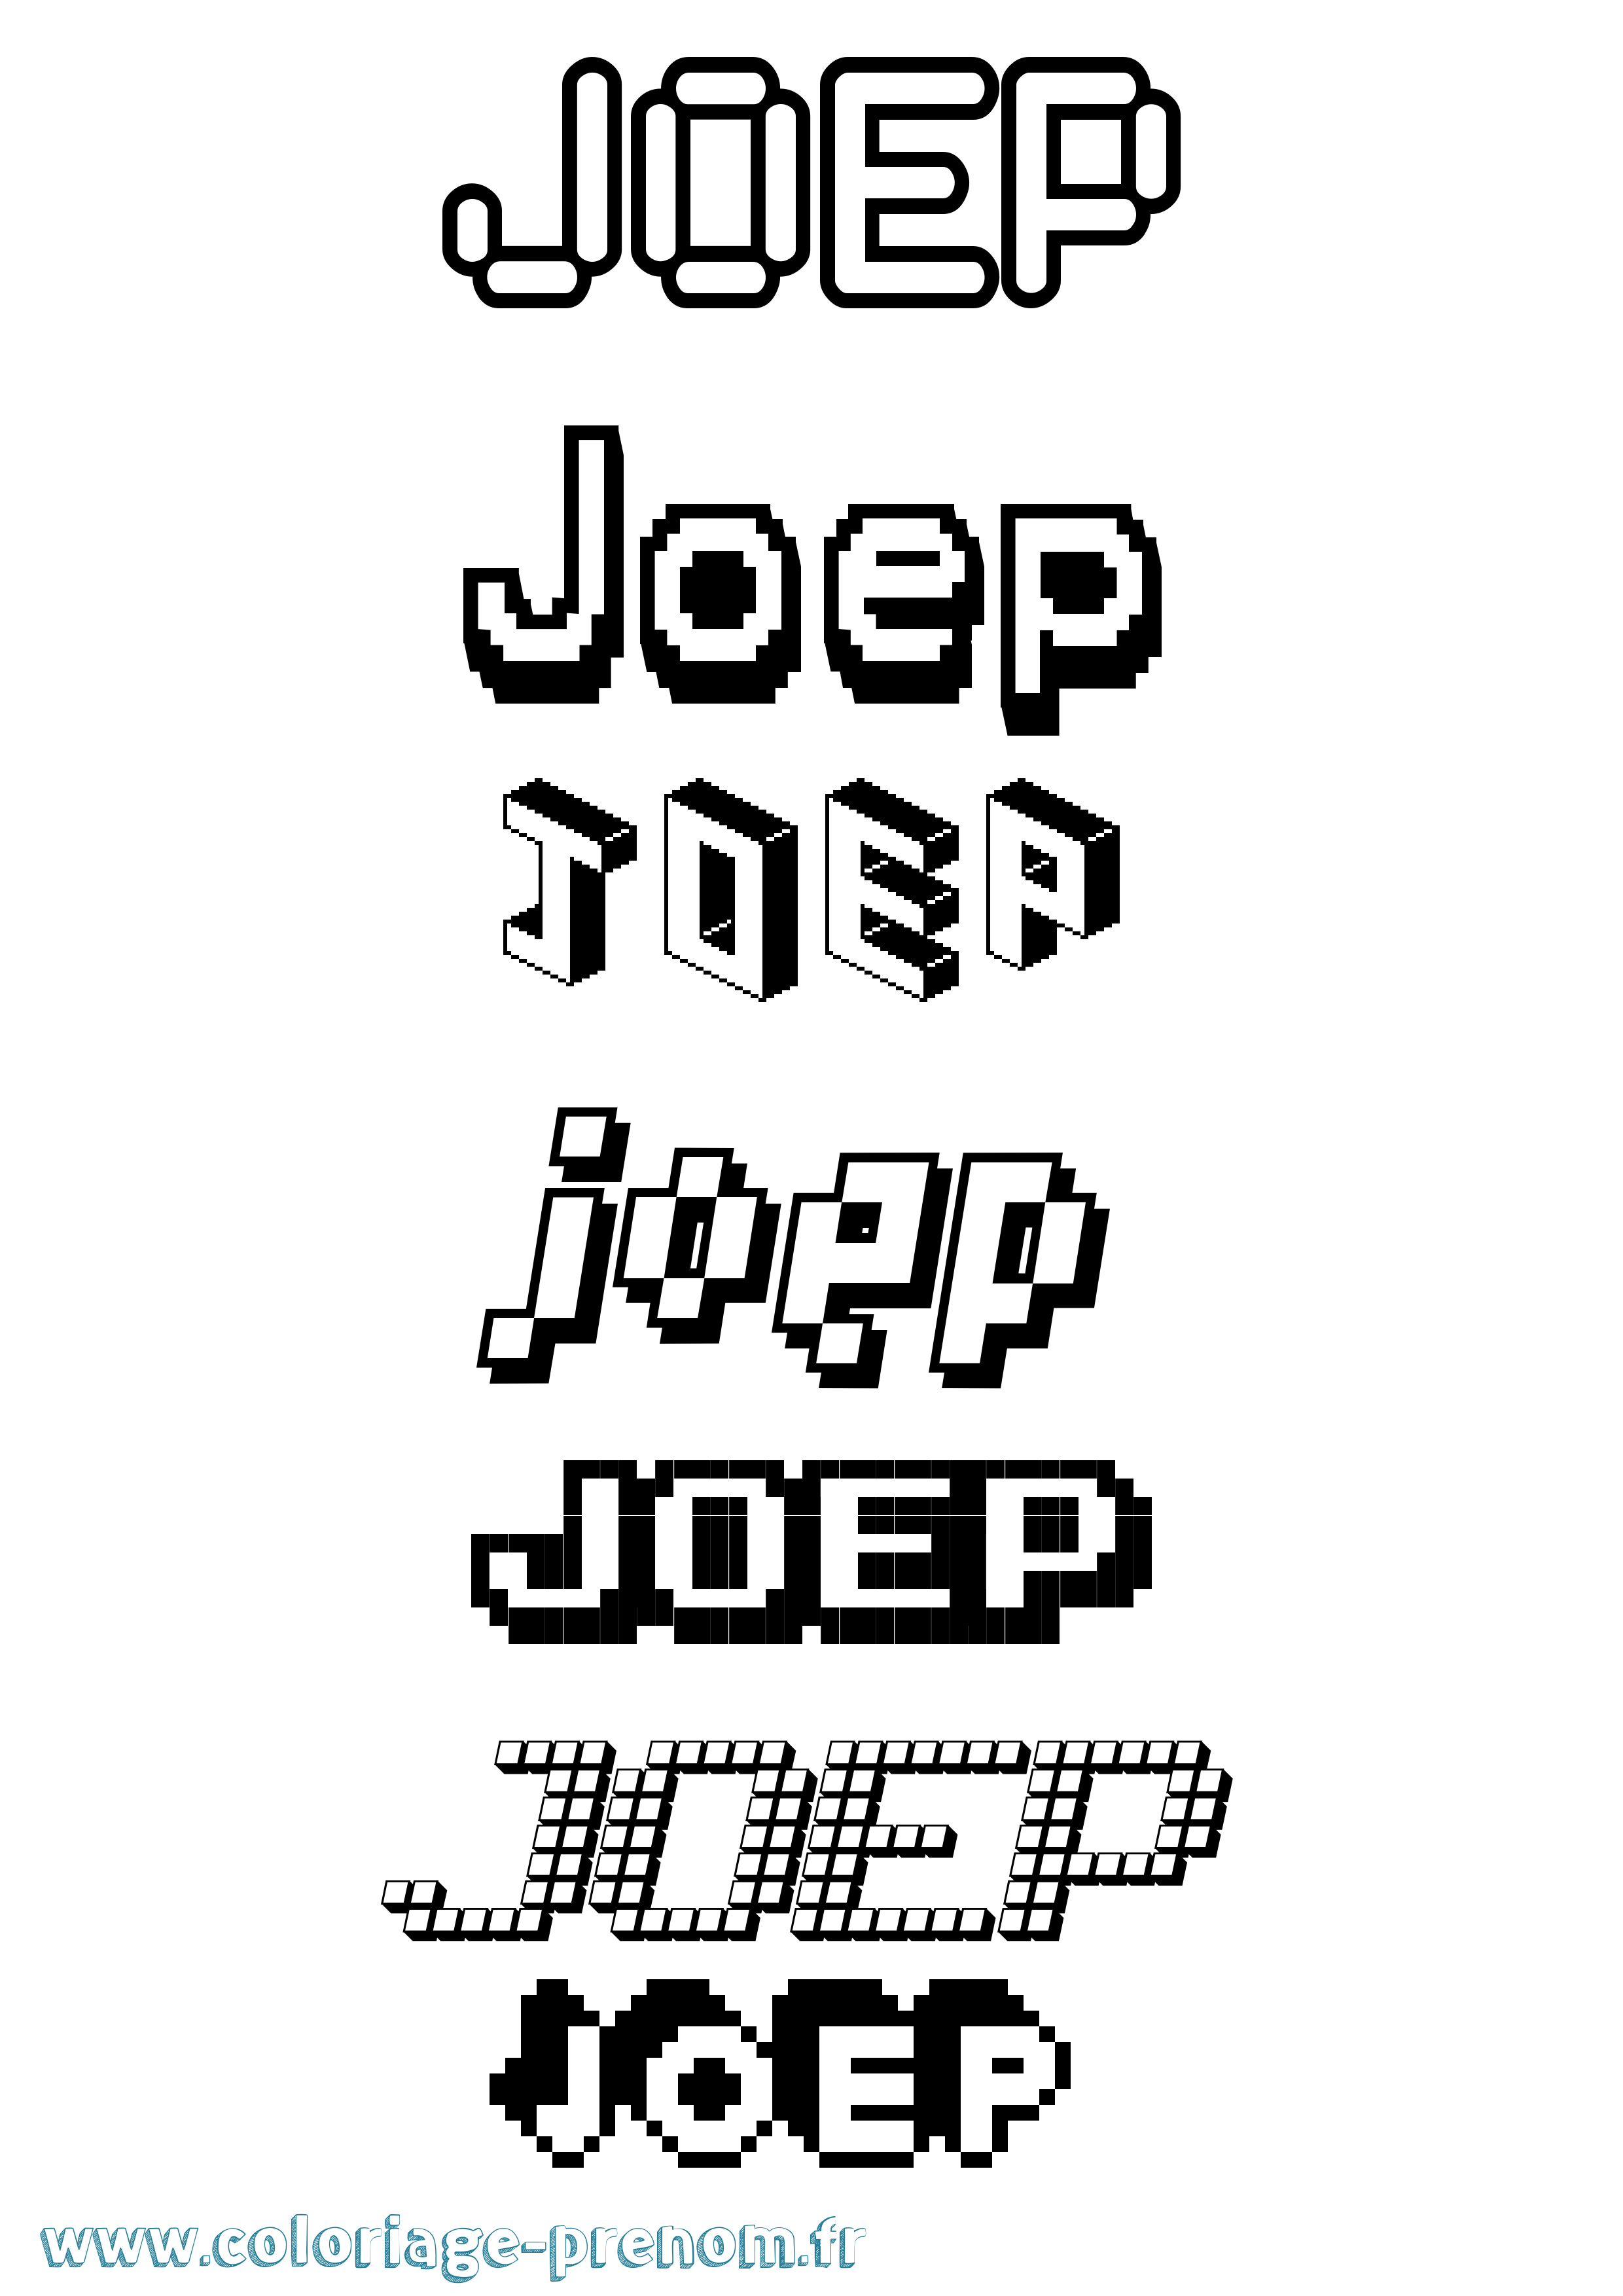 Coloriage prénom Joep Pixel